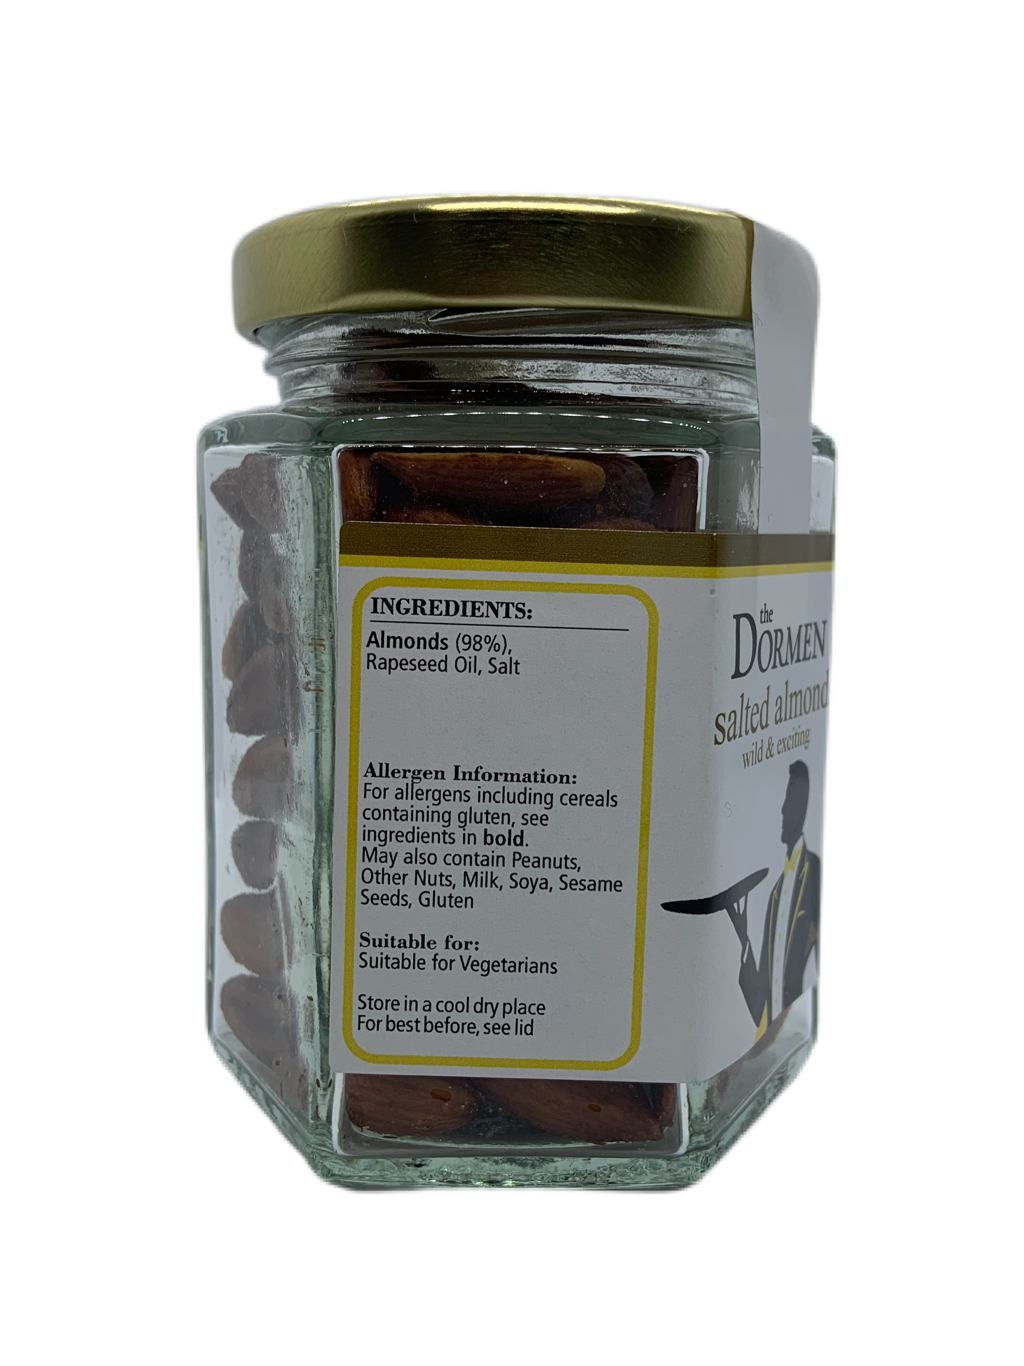 Salted Almonds Hexagonal Jar - The Dormen Food Company